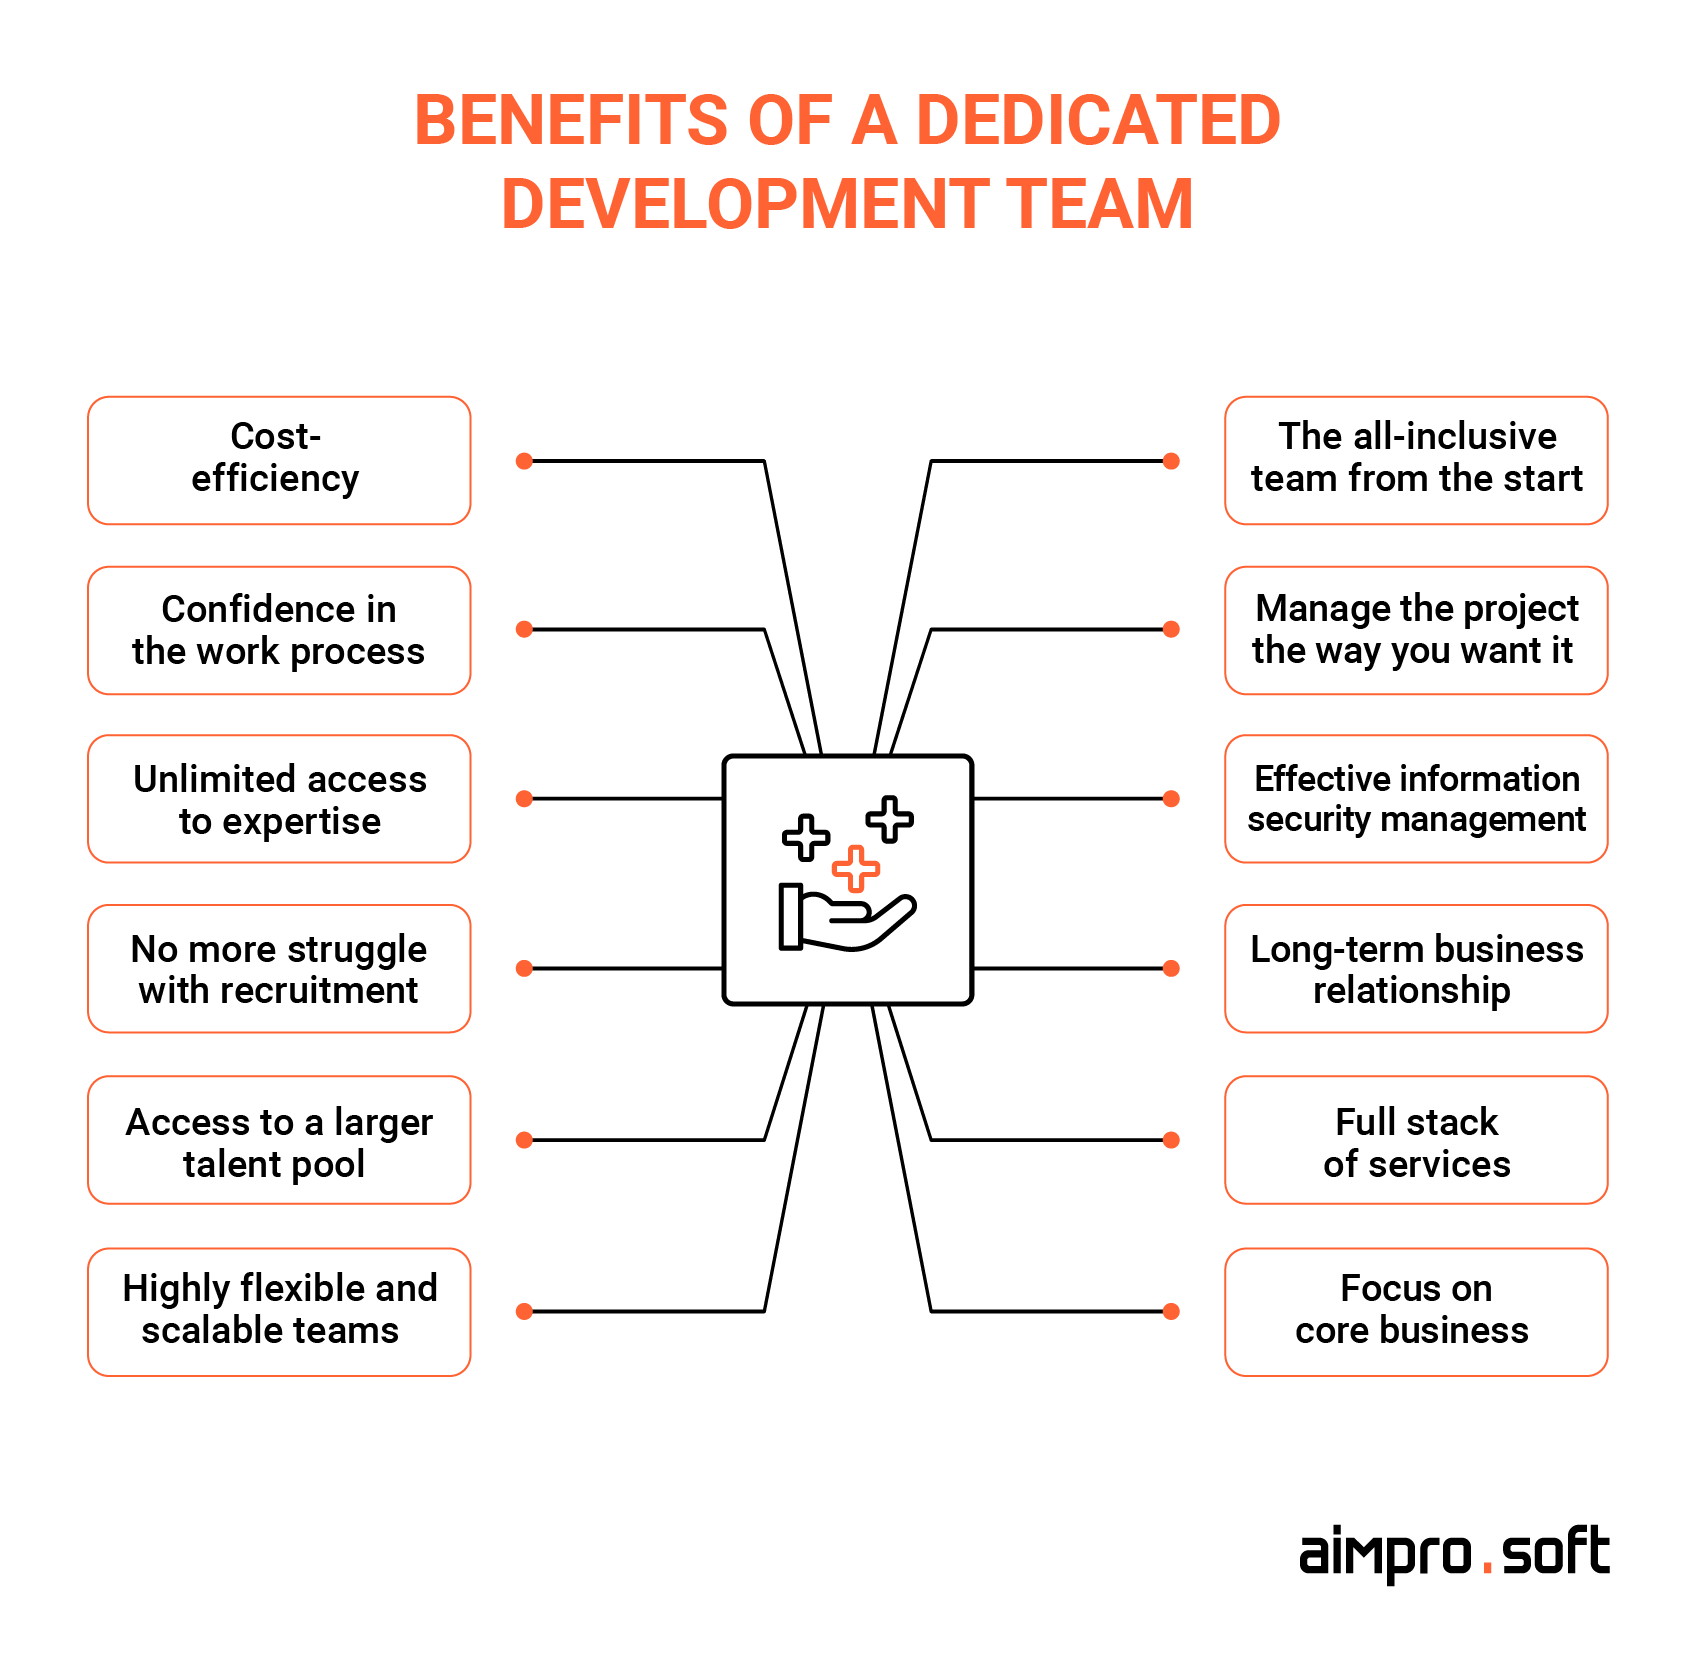 Main benefits of dedicated development teams